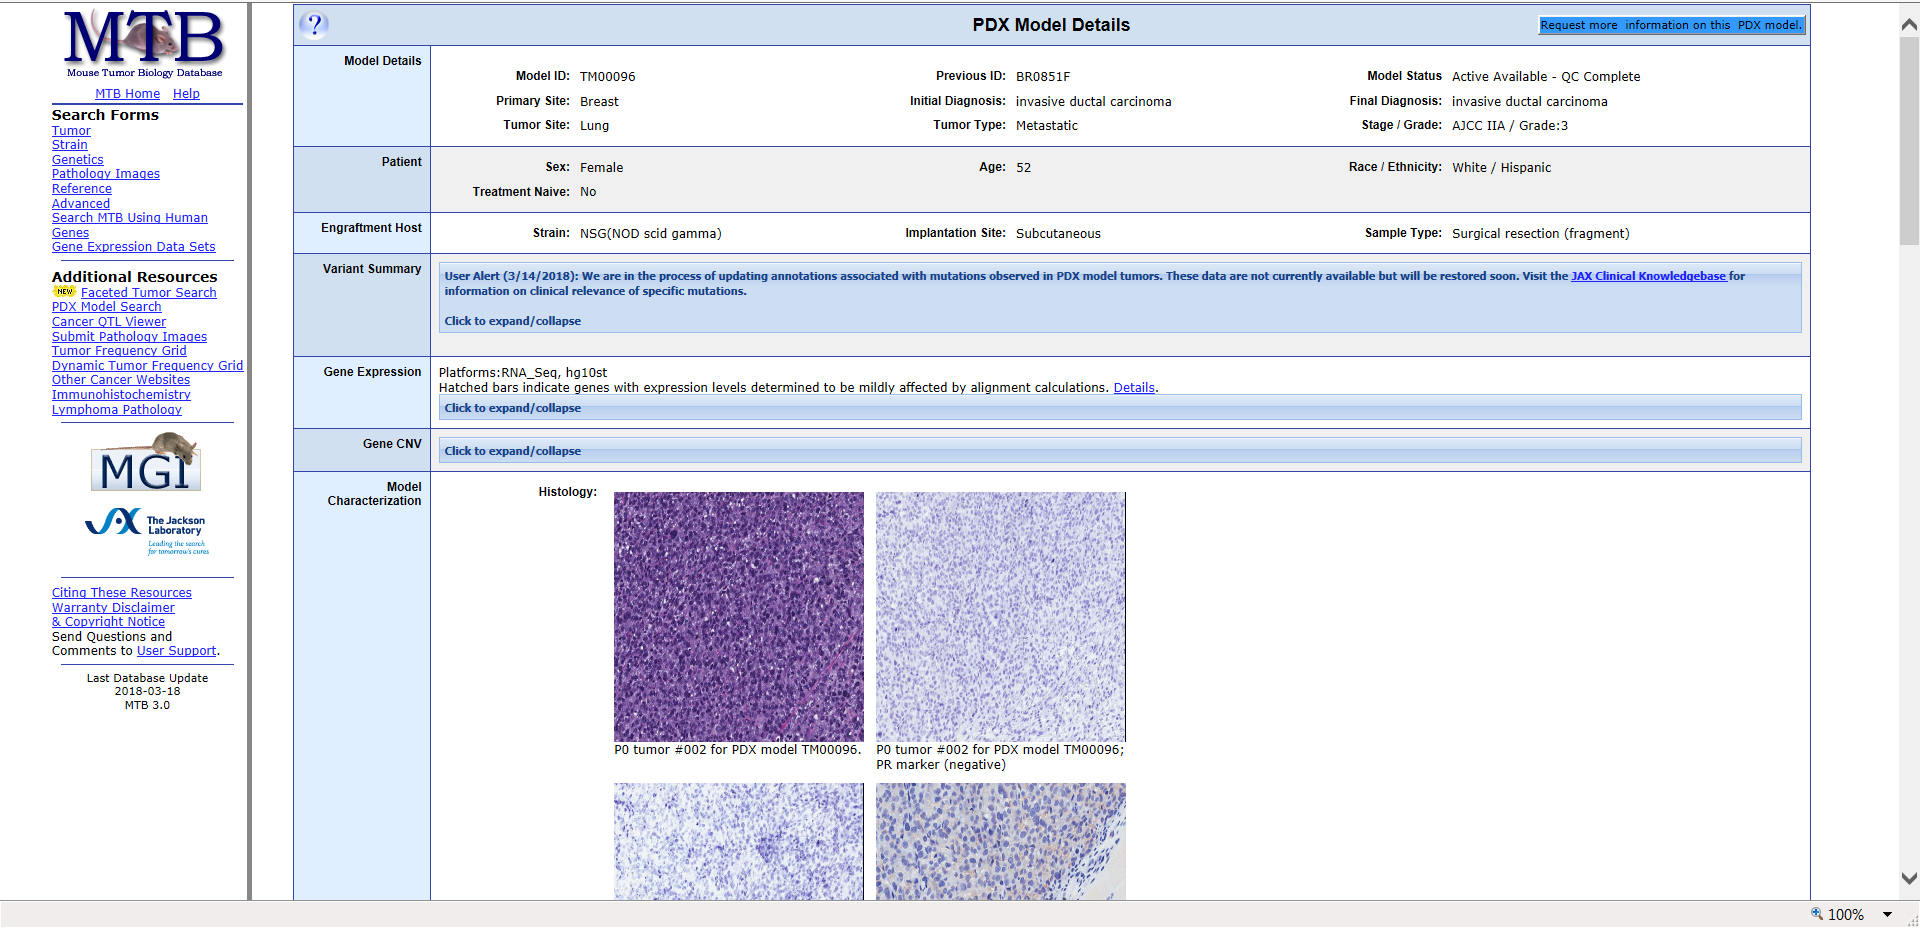 mouse tumor biology database